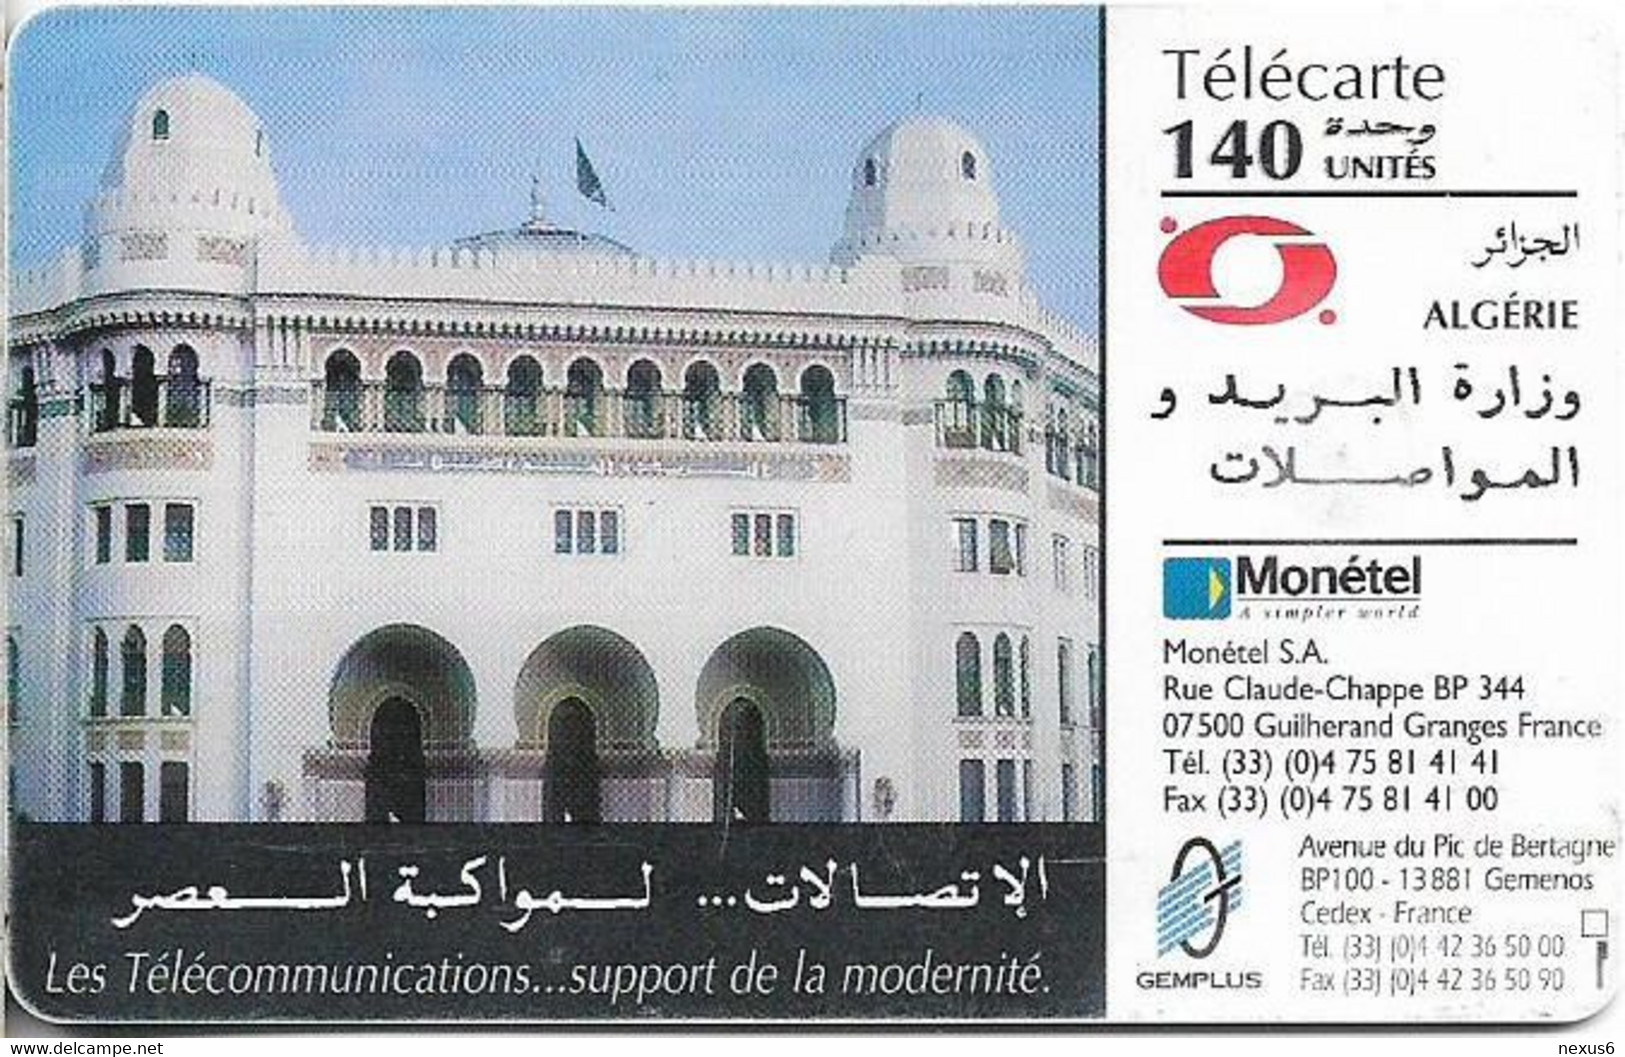 Algeria - PTT-Monetel - Central Post Office, Gem1B Not Symmetr. White/Gold, 1996, 140Units, Used - Algérie